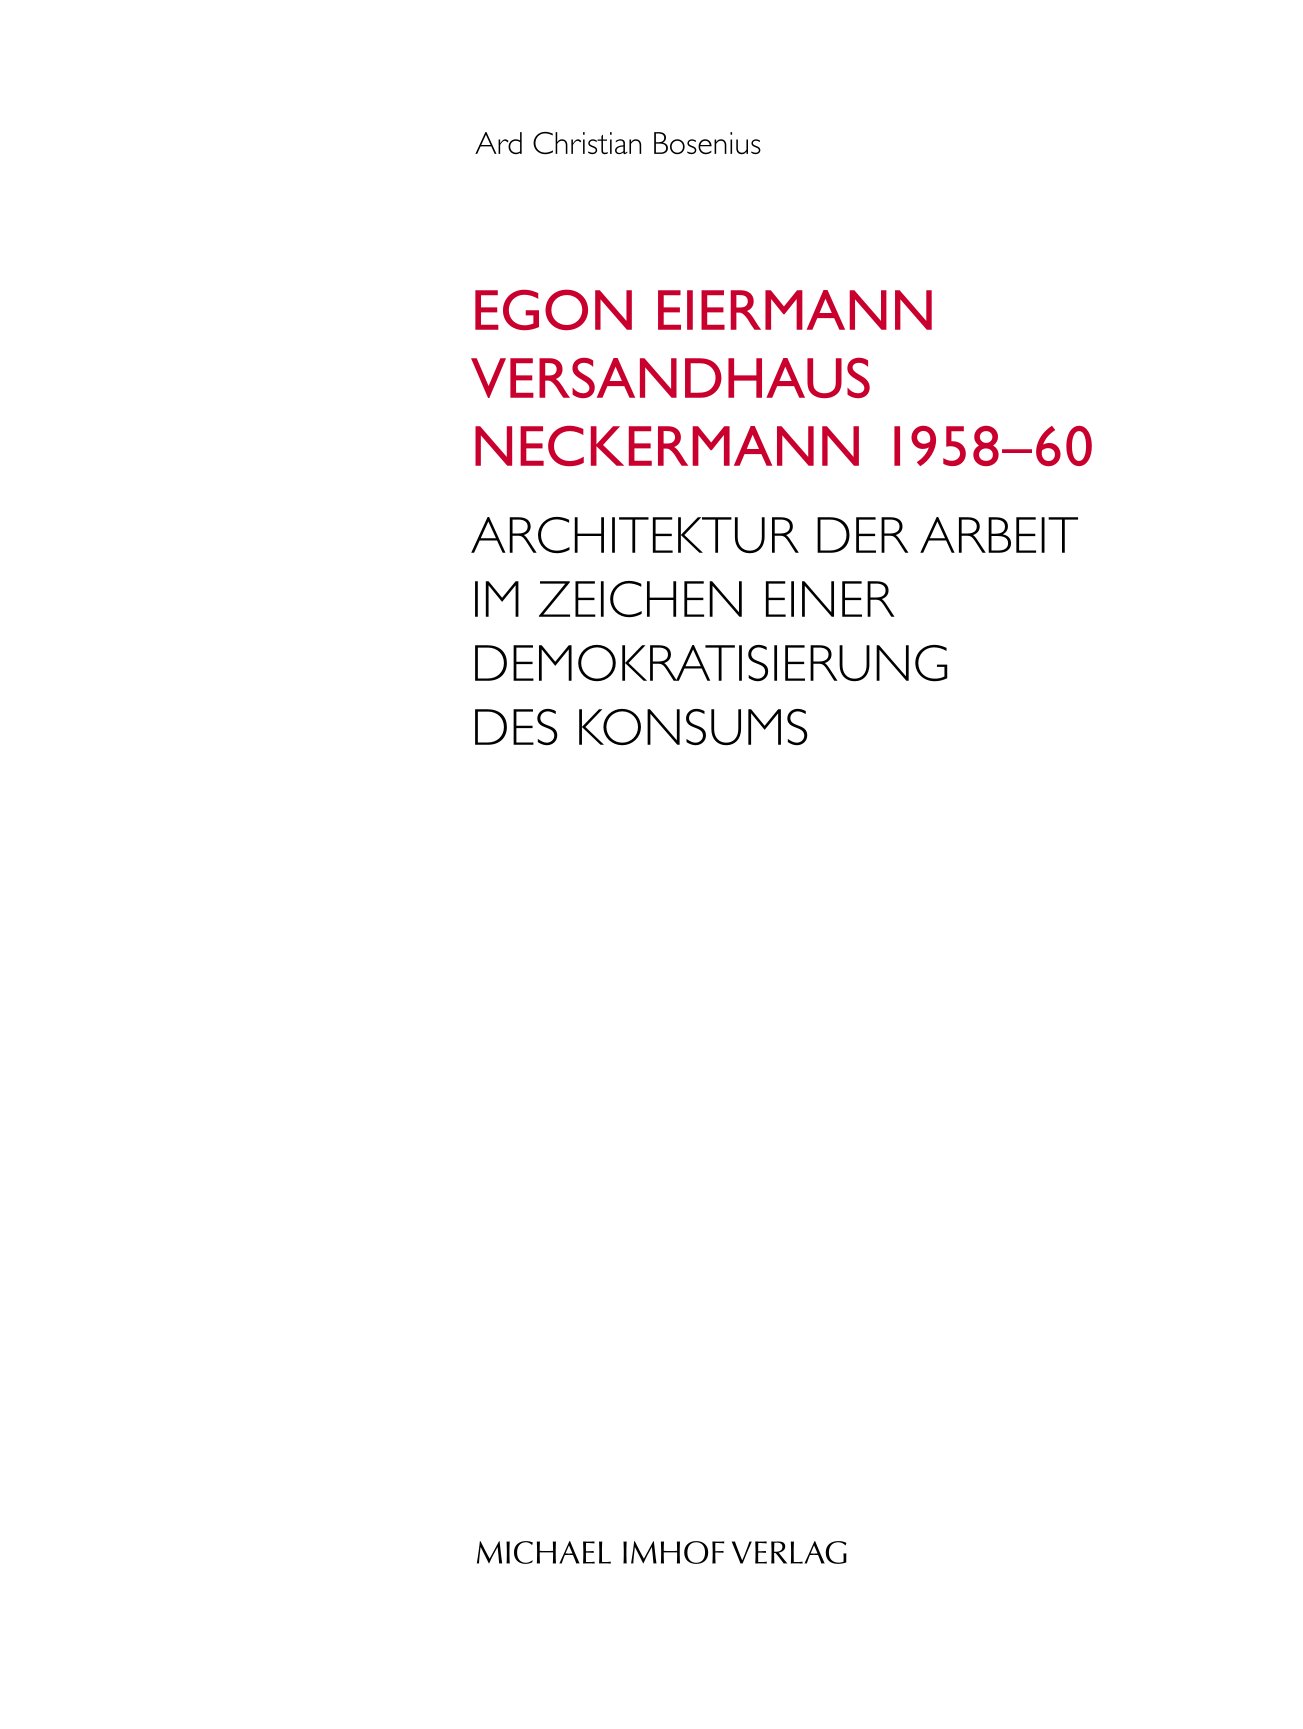 Egon Eiermann: Versandhaus Neckermann 1958–60